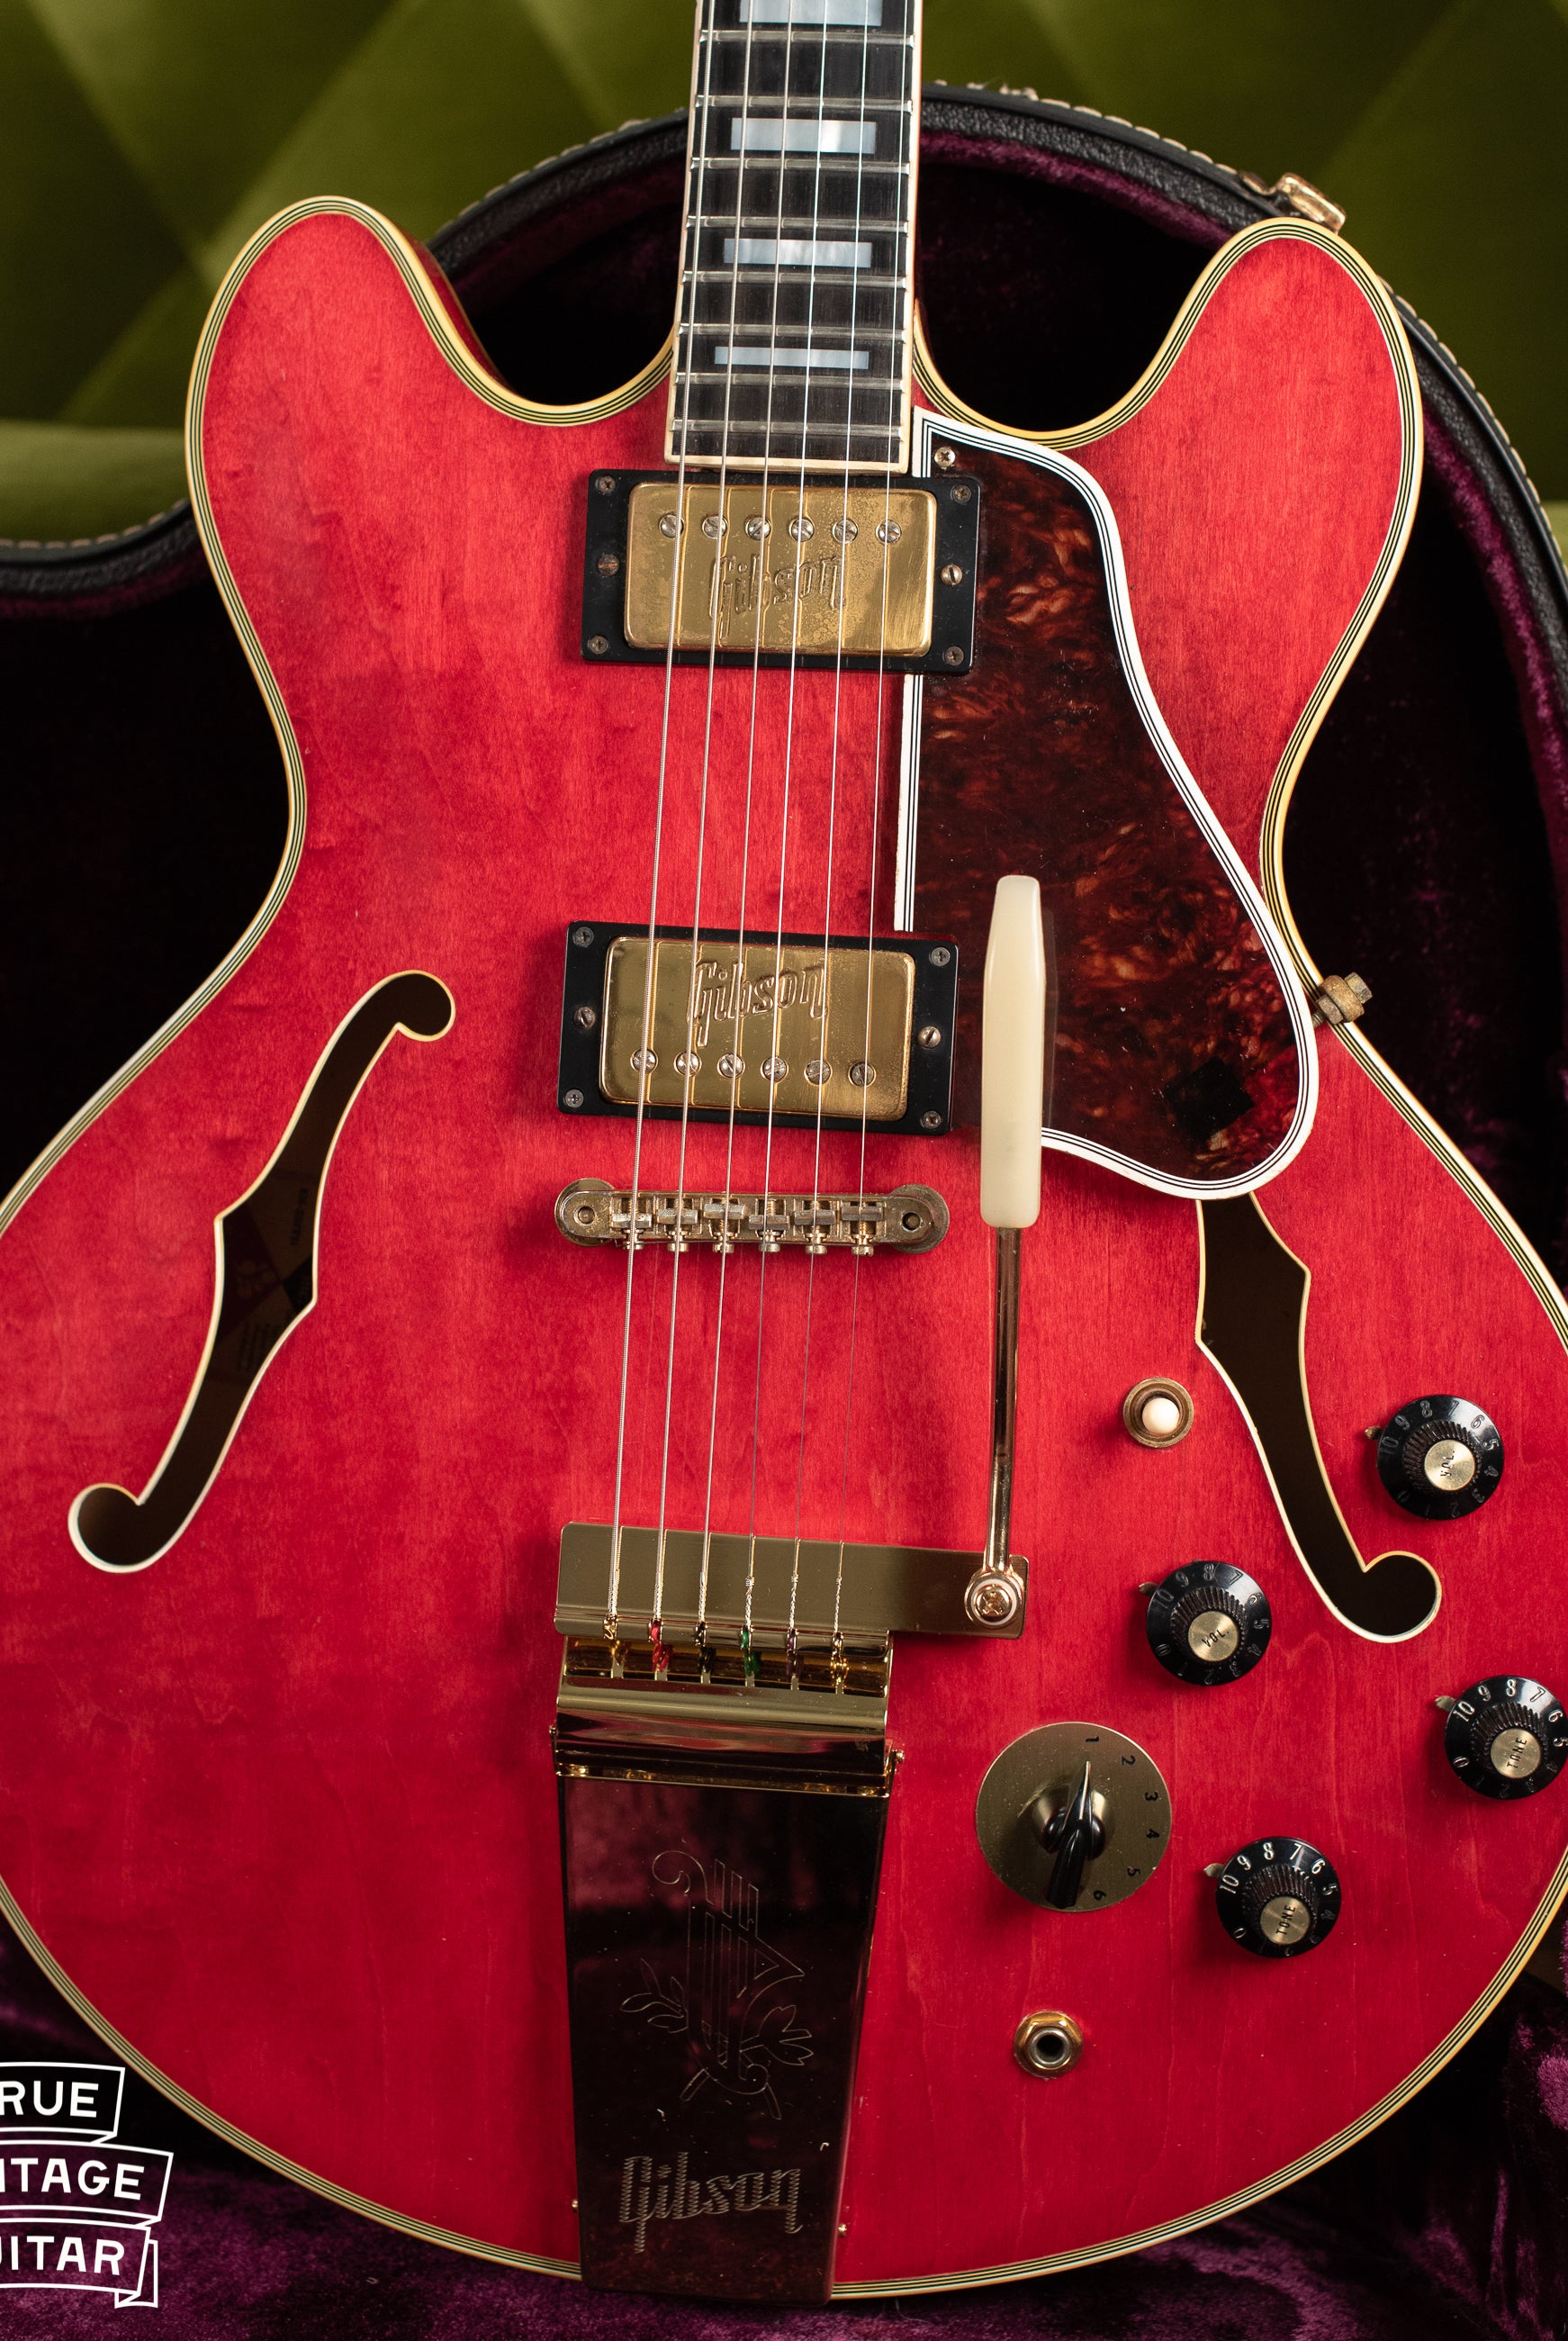 1972 Gibson ES-355 TDSV Cherry Red guitar